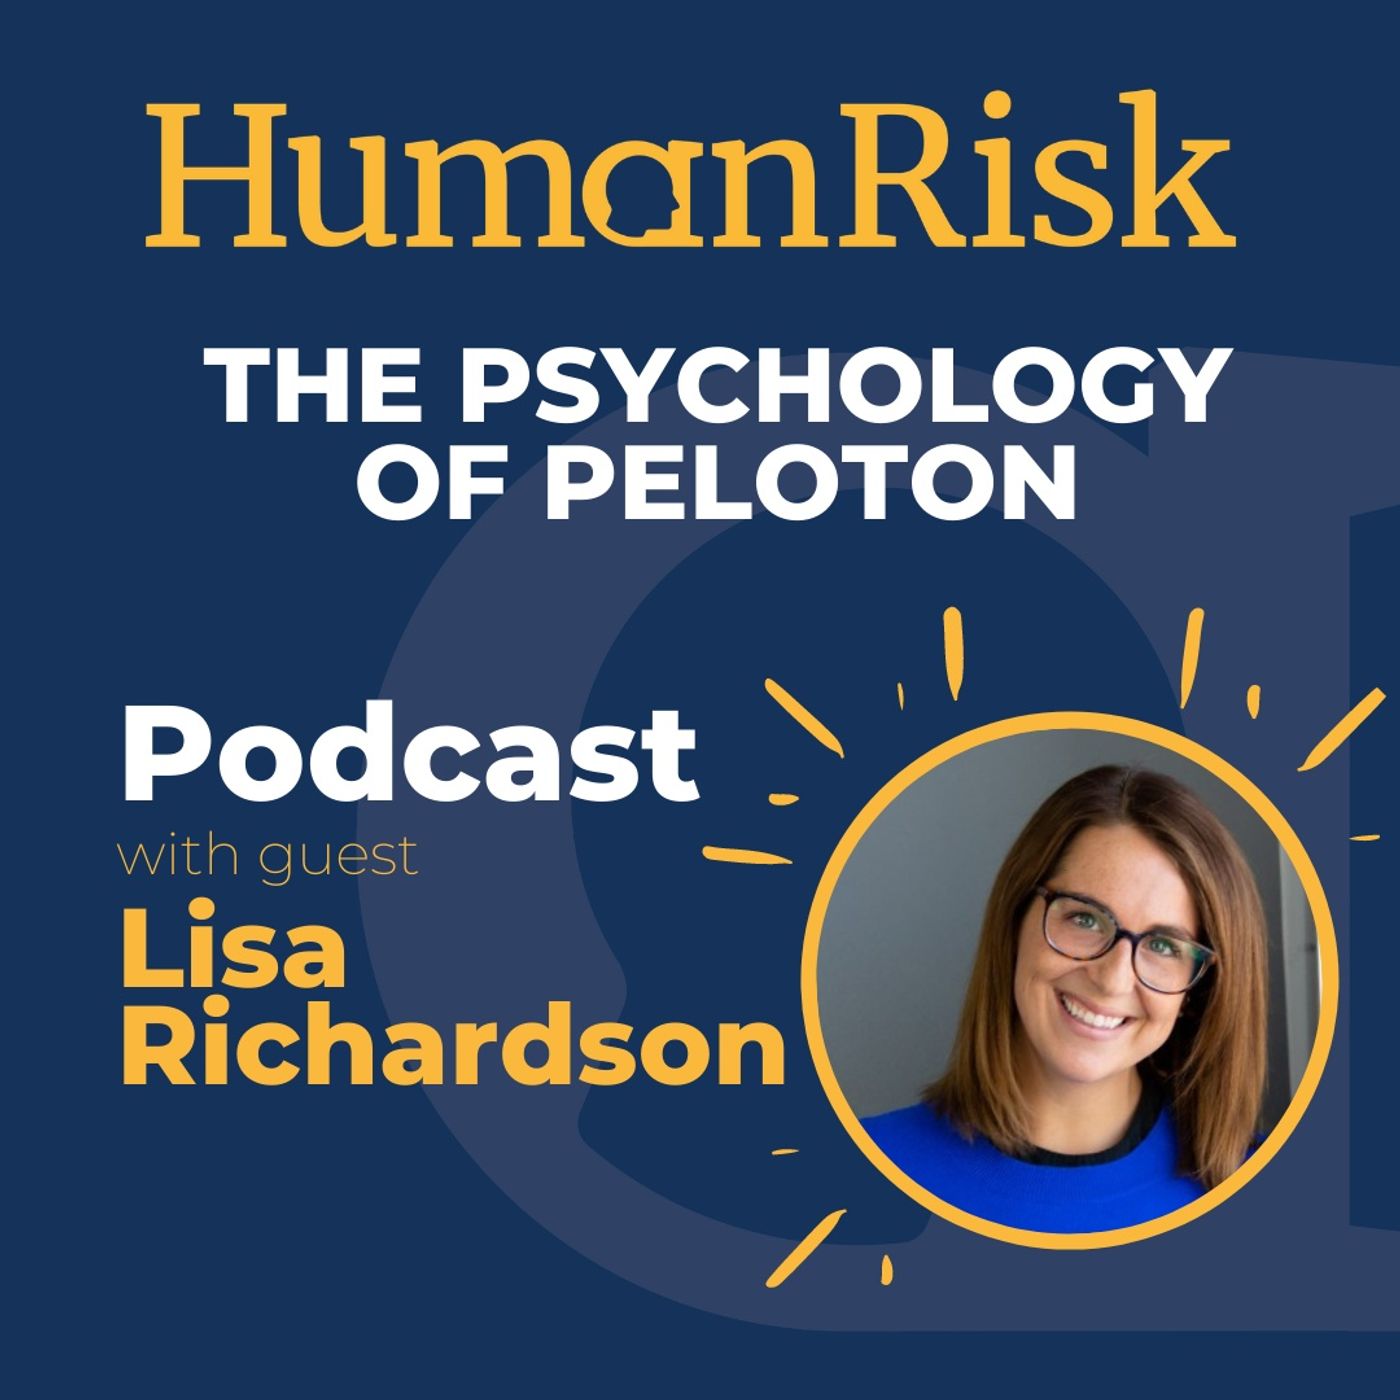 Lisa Richardson on the Psychology of Peloton